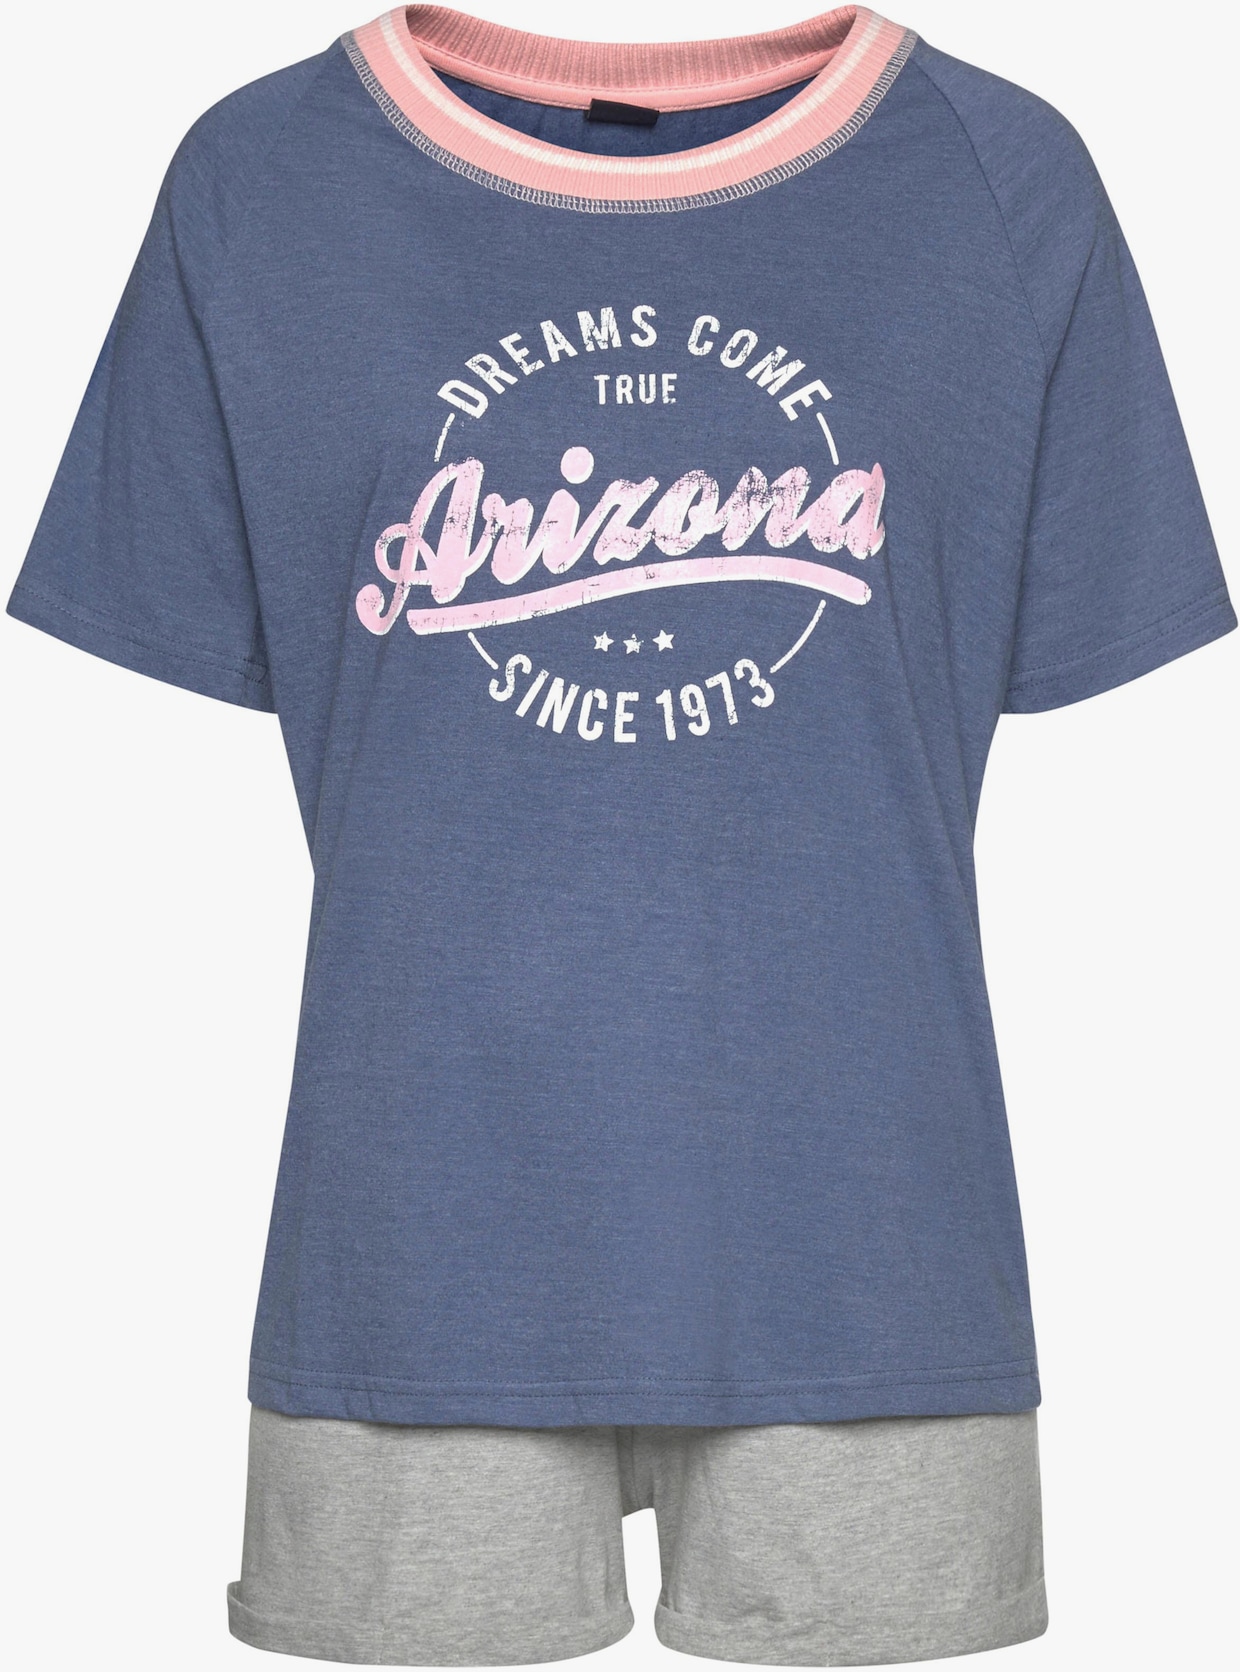 Arizona shortama - blauw gemêleerd/grijs gemêleerd